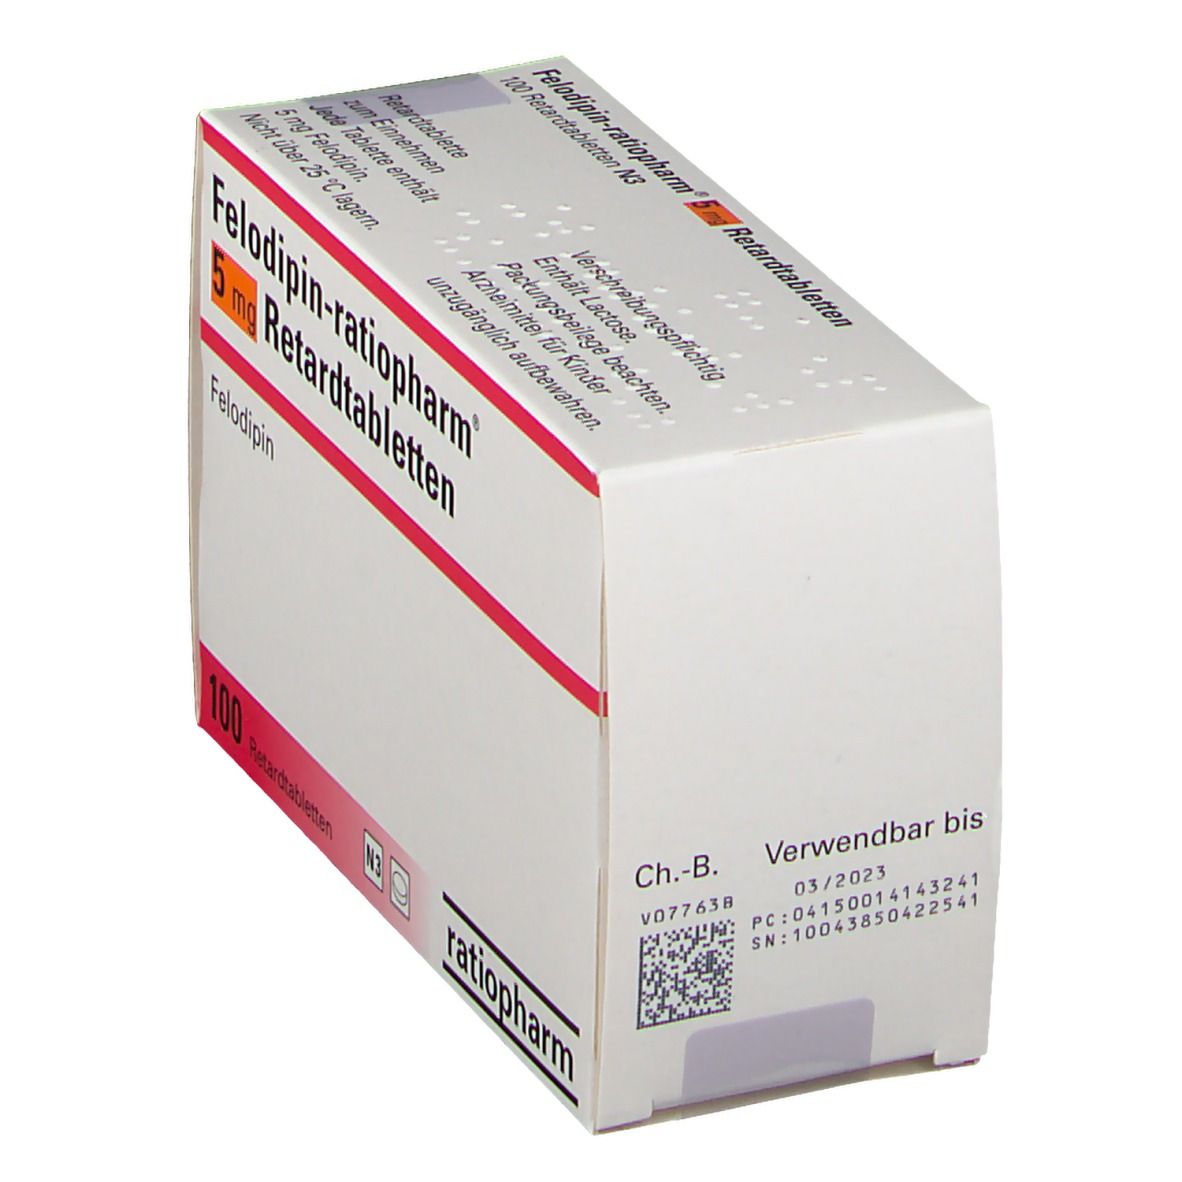 Felodipin-ratiopharm® 5 mg